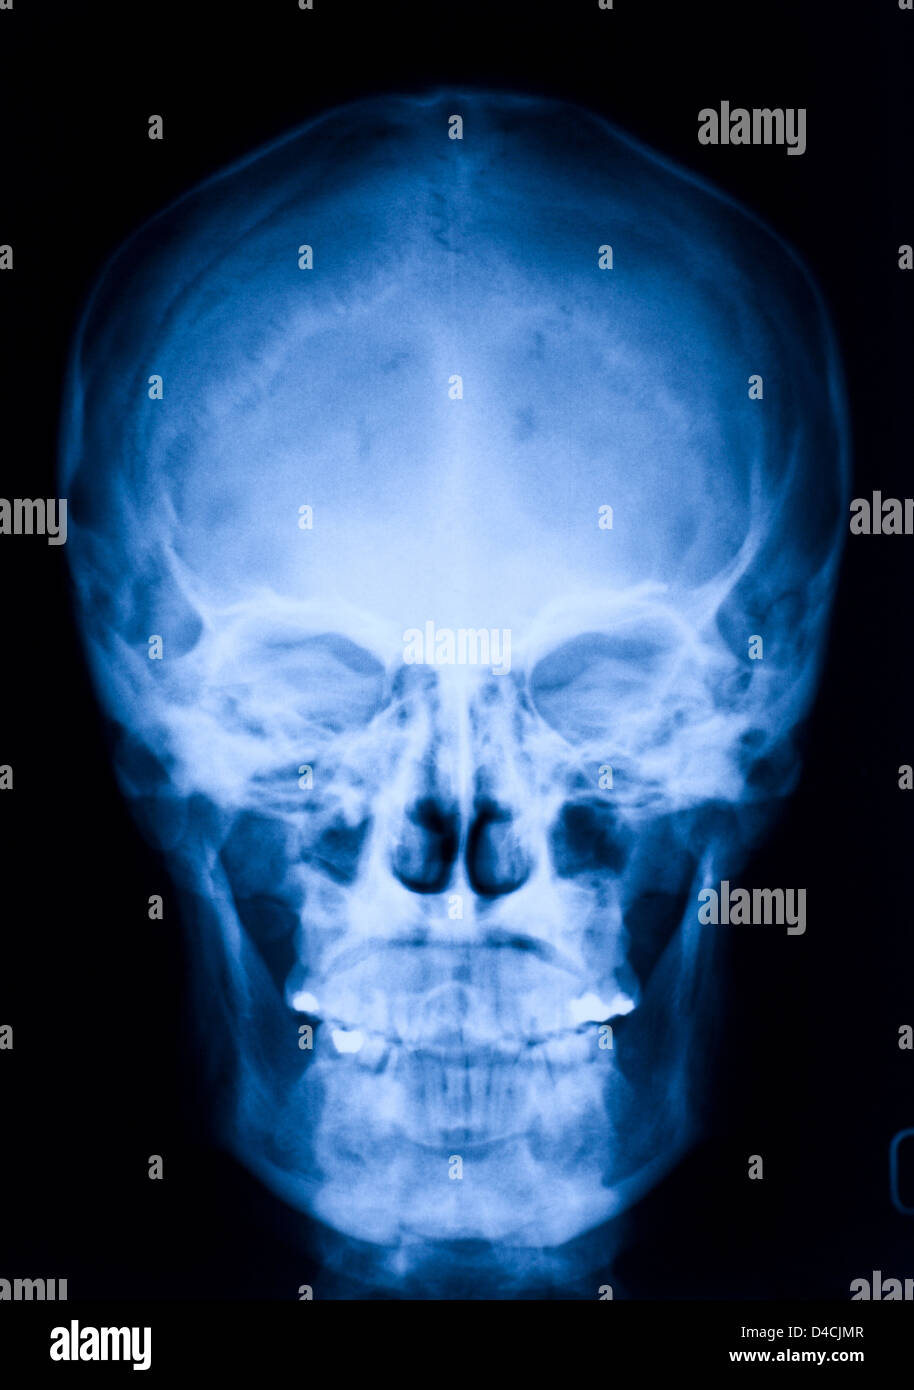 image of skull blue xray Stock Photo